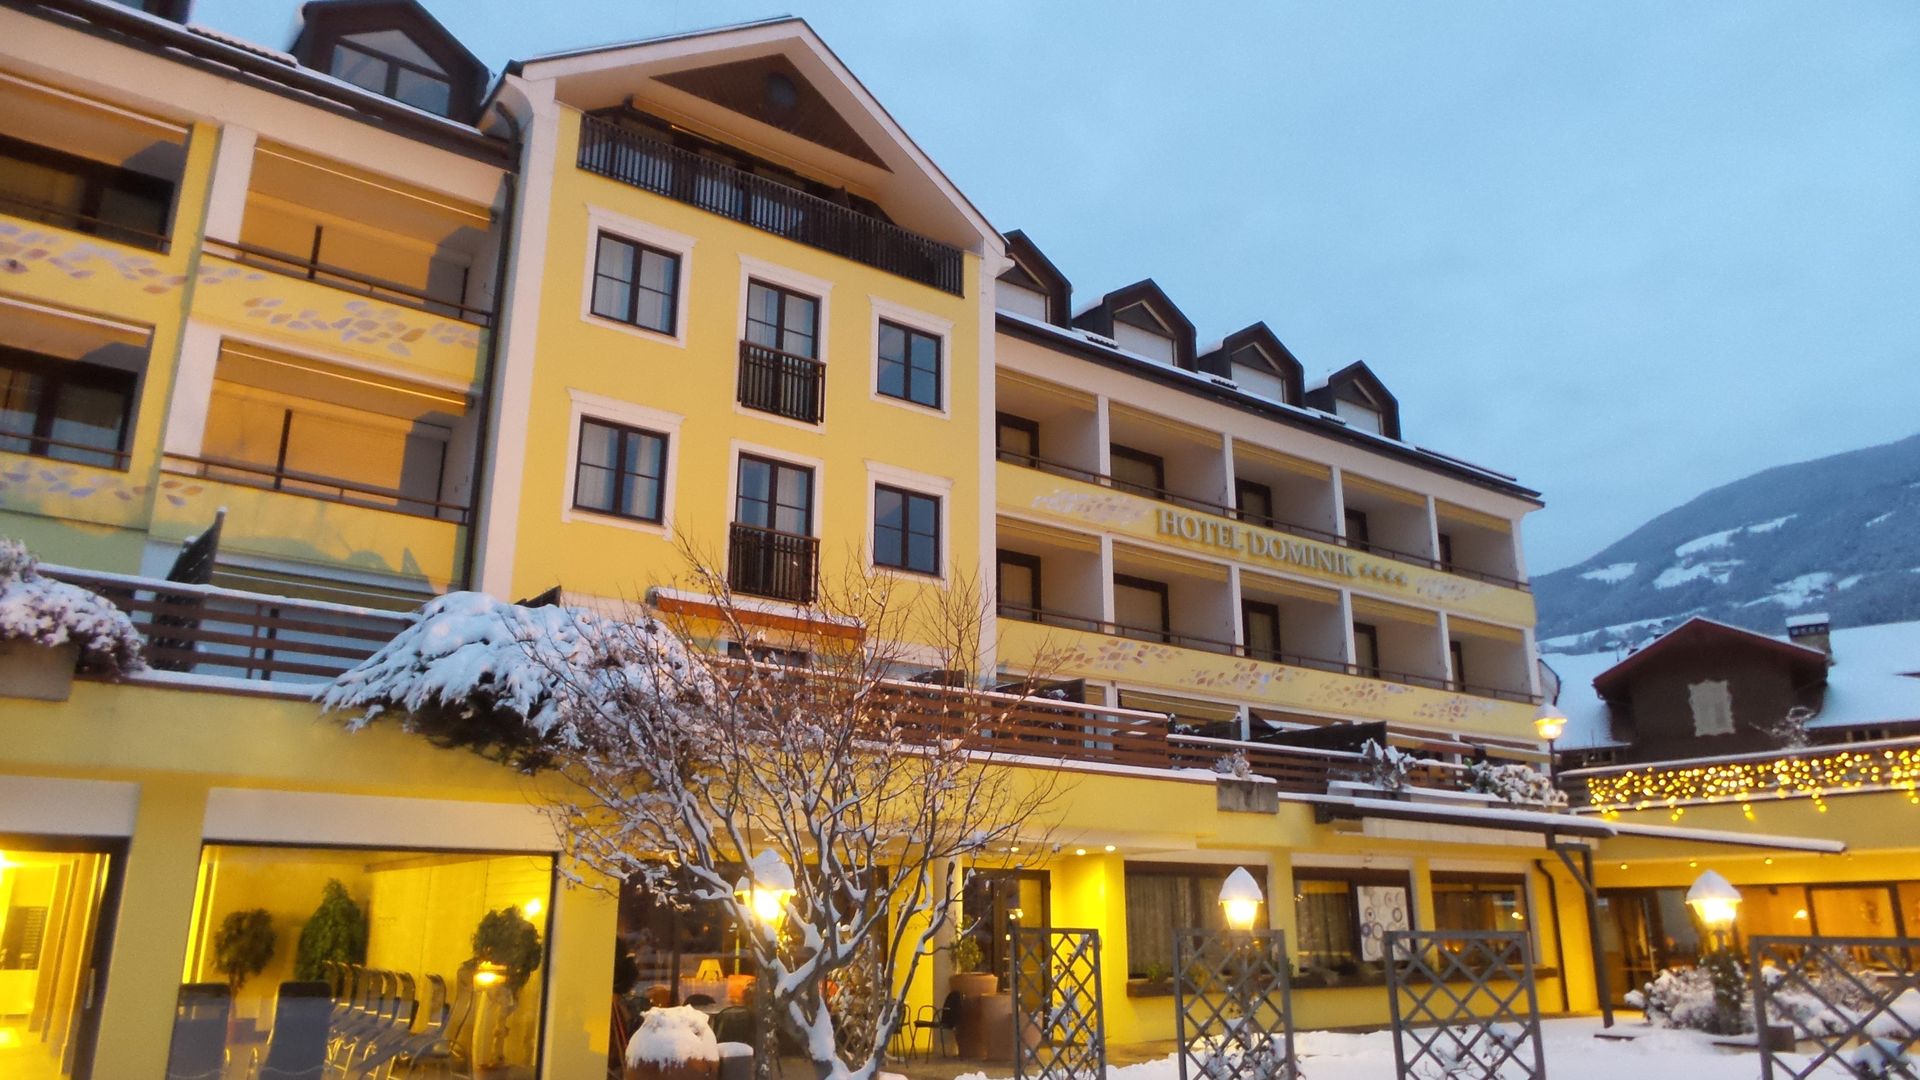 Slide1 - Dominik Alpine-City Wellness Hotel